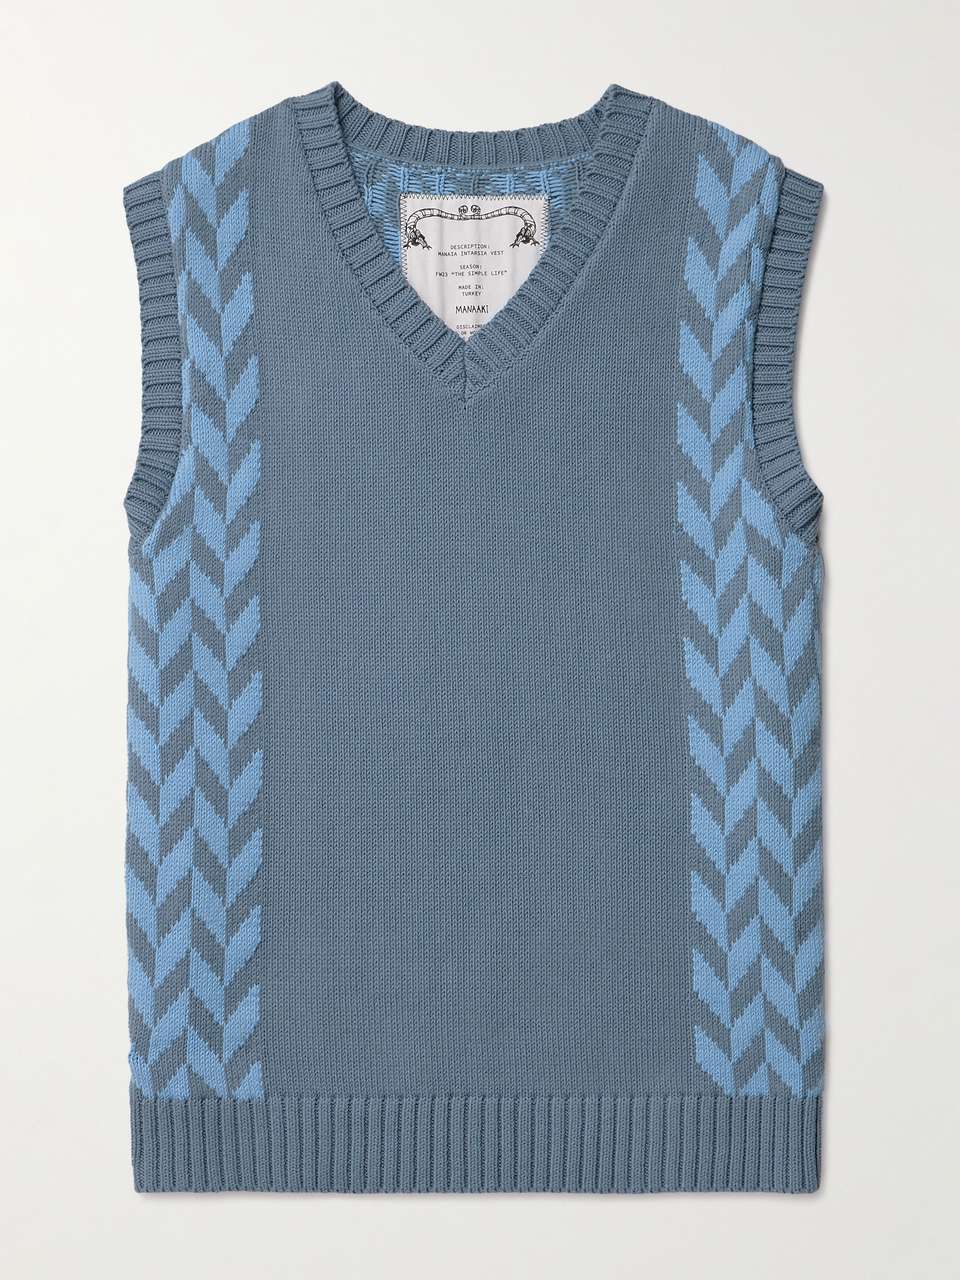 MANAAKI Manaia Slim-Fit Intarsia Cotton Sweater Vest for Men | MR PORTER